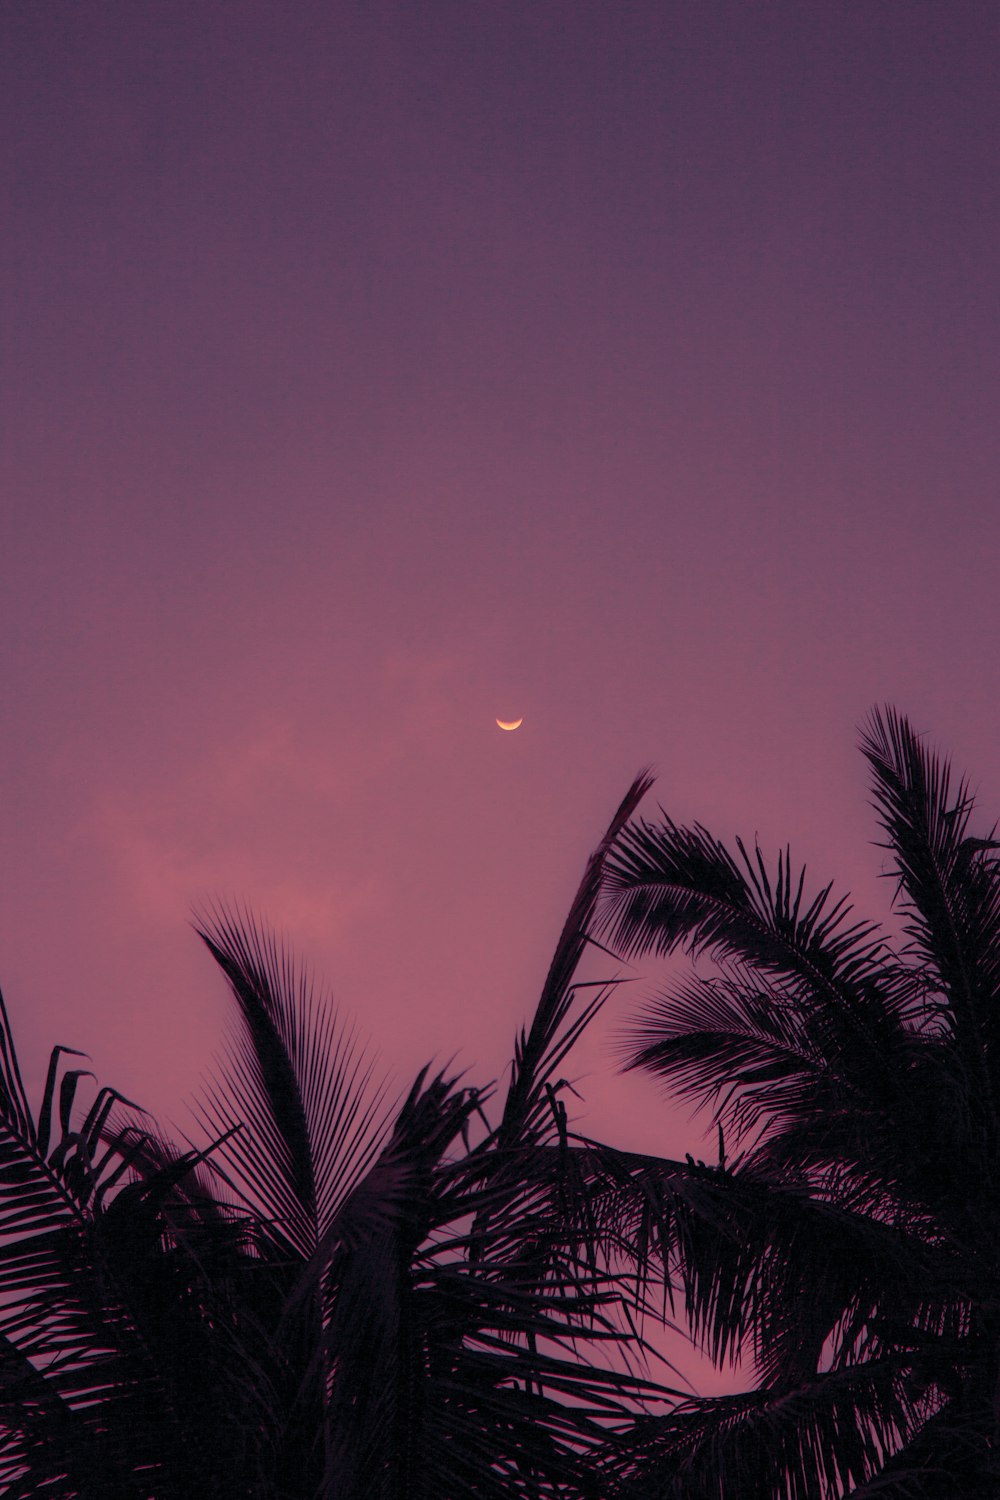 a purple sky with palm trees and a half moon